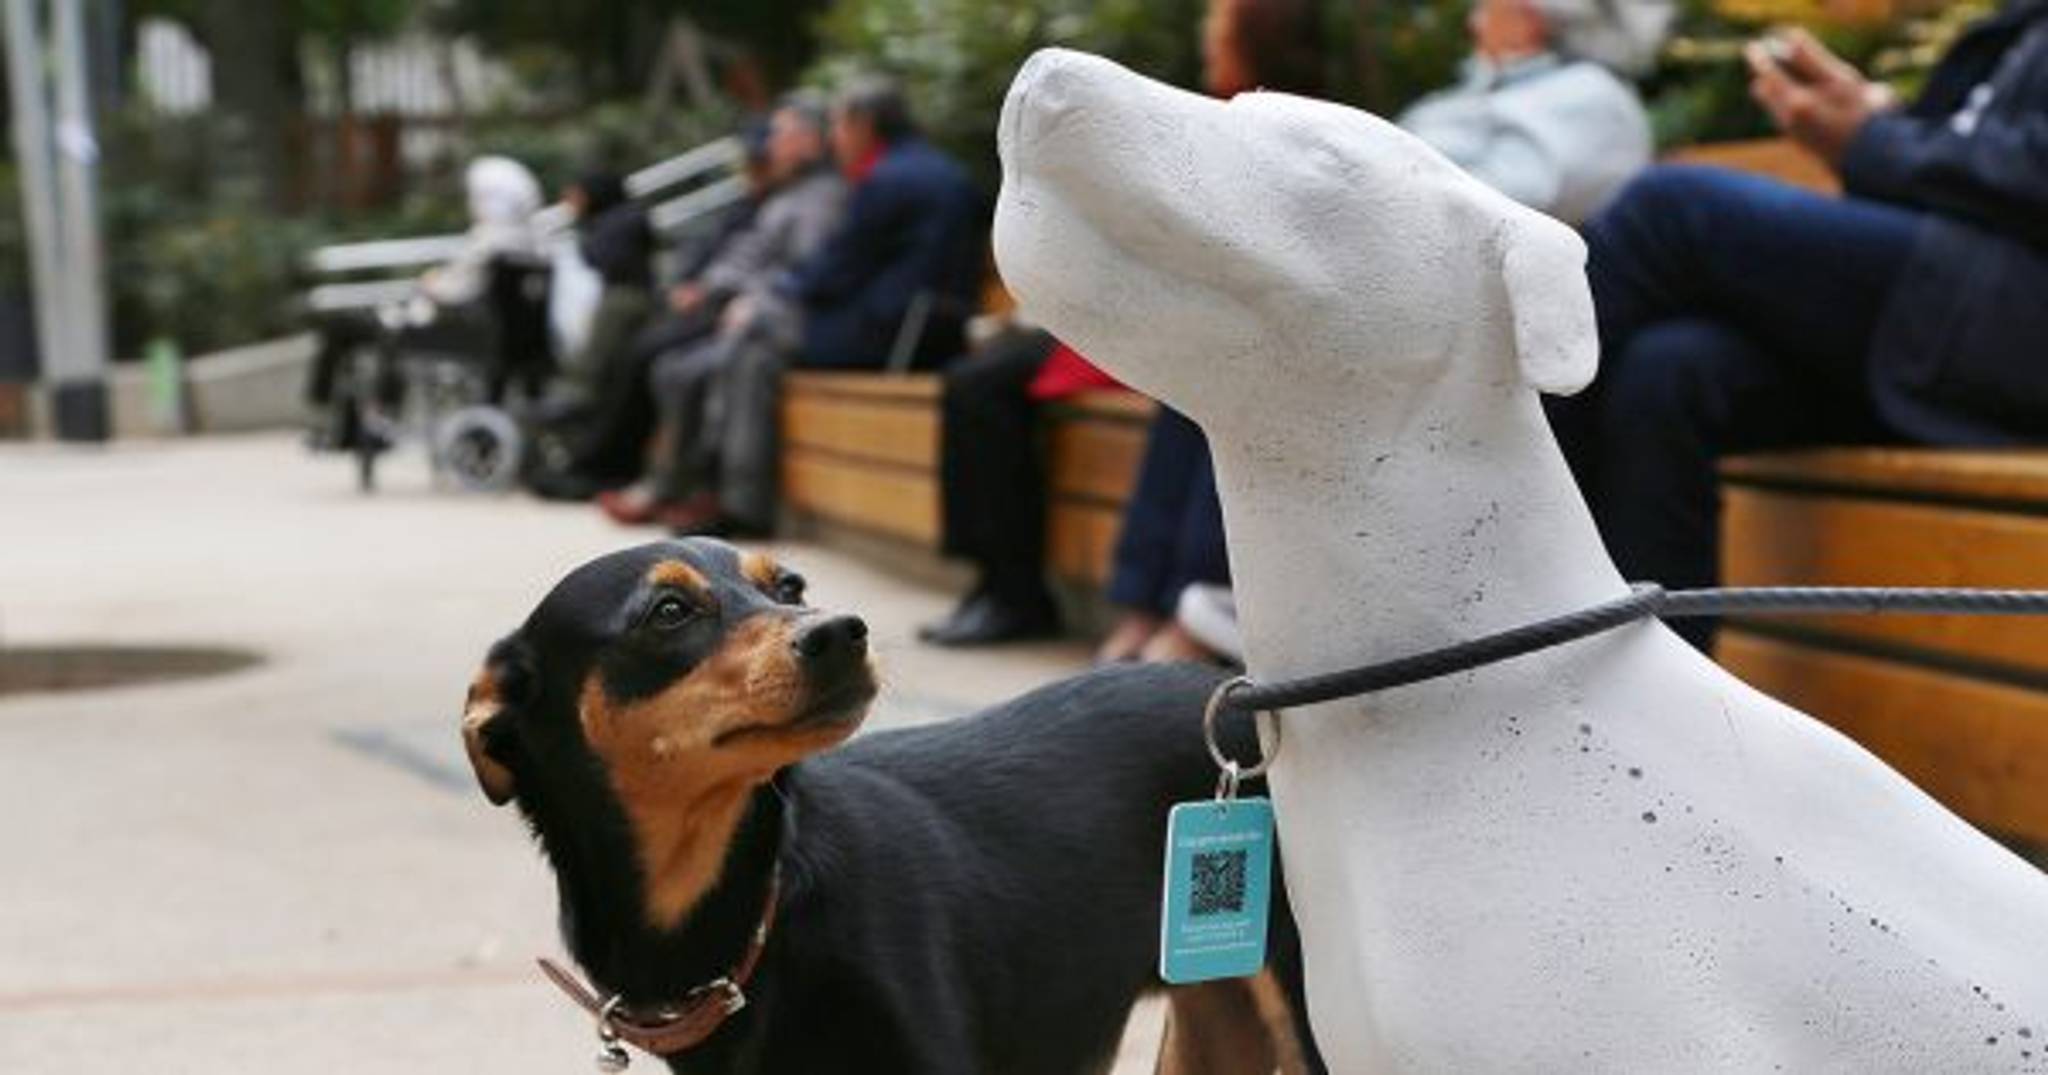 Barcelona dog statues encourage pet adoption